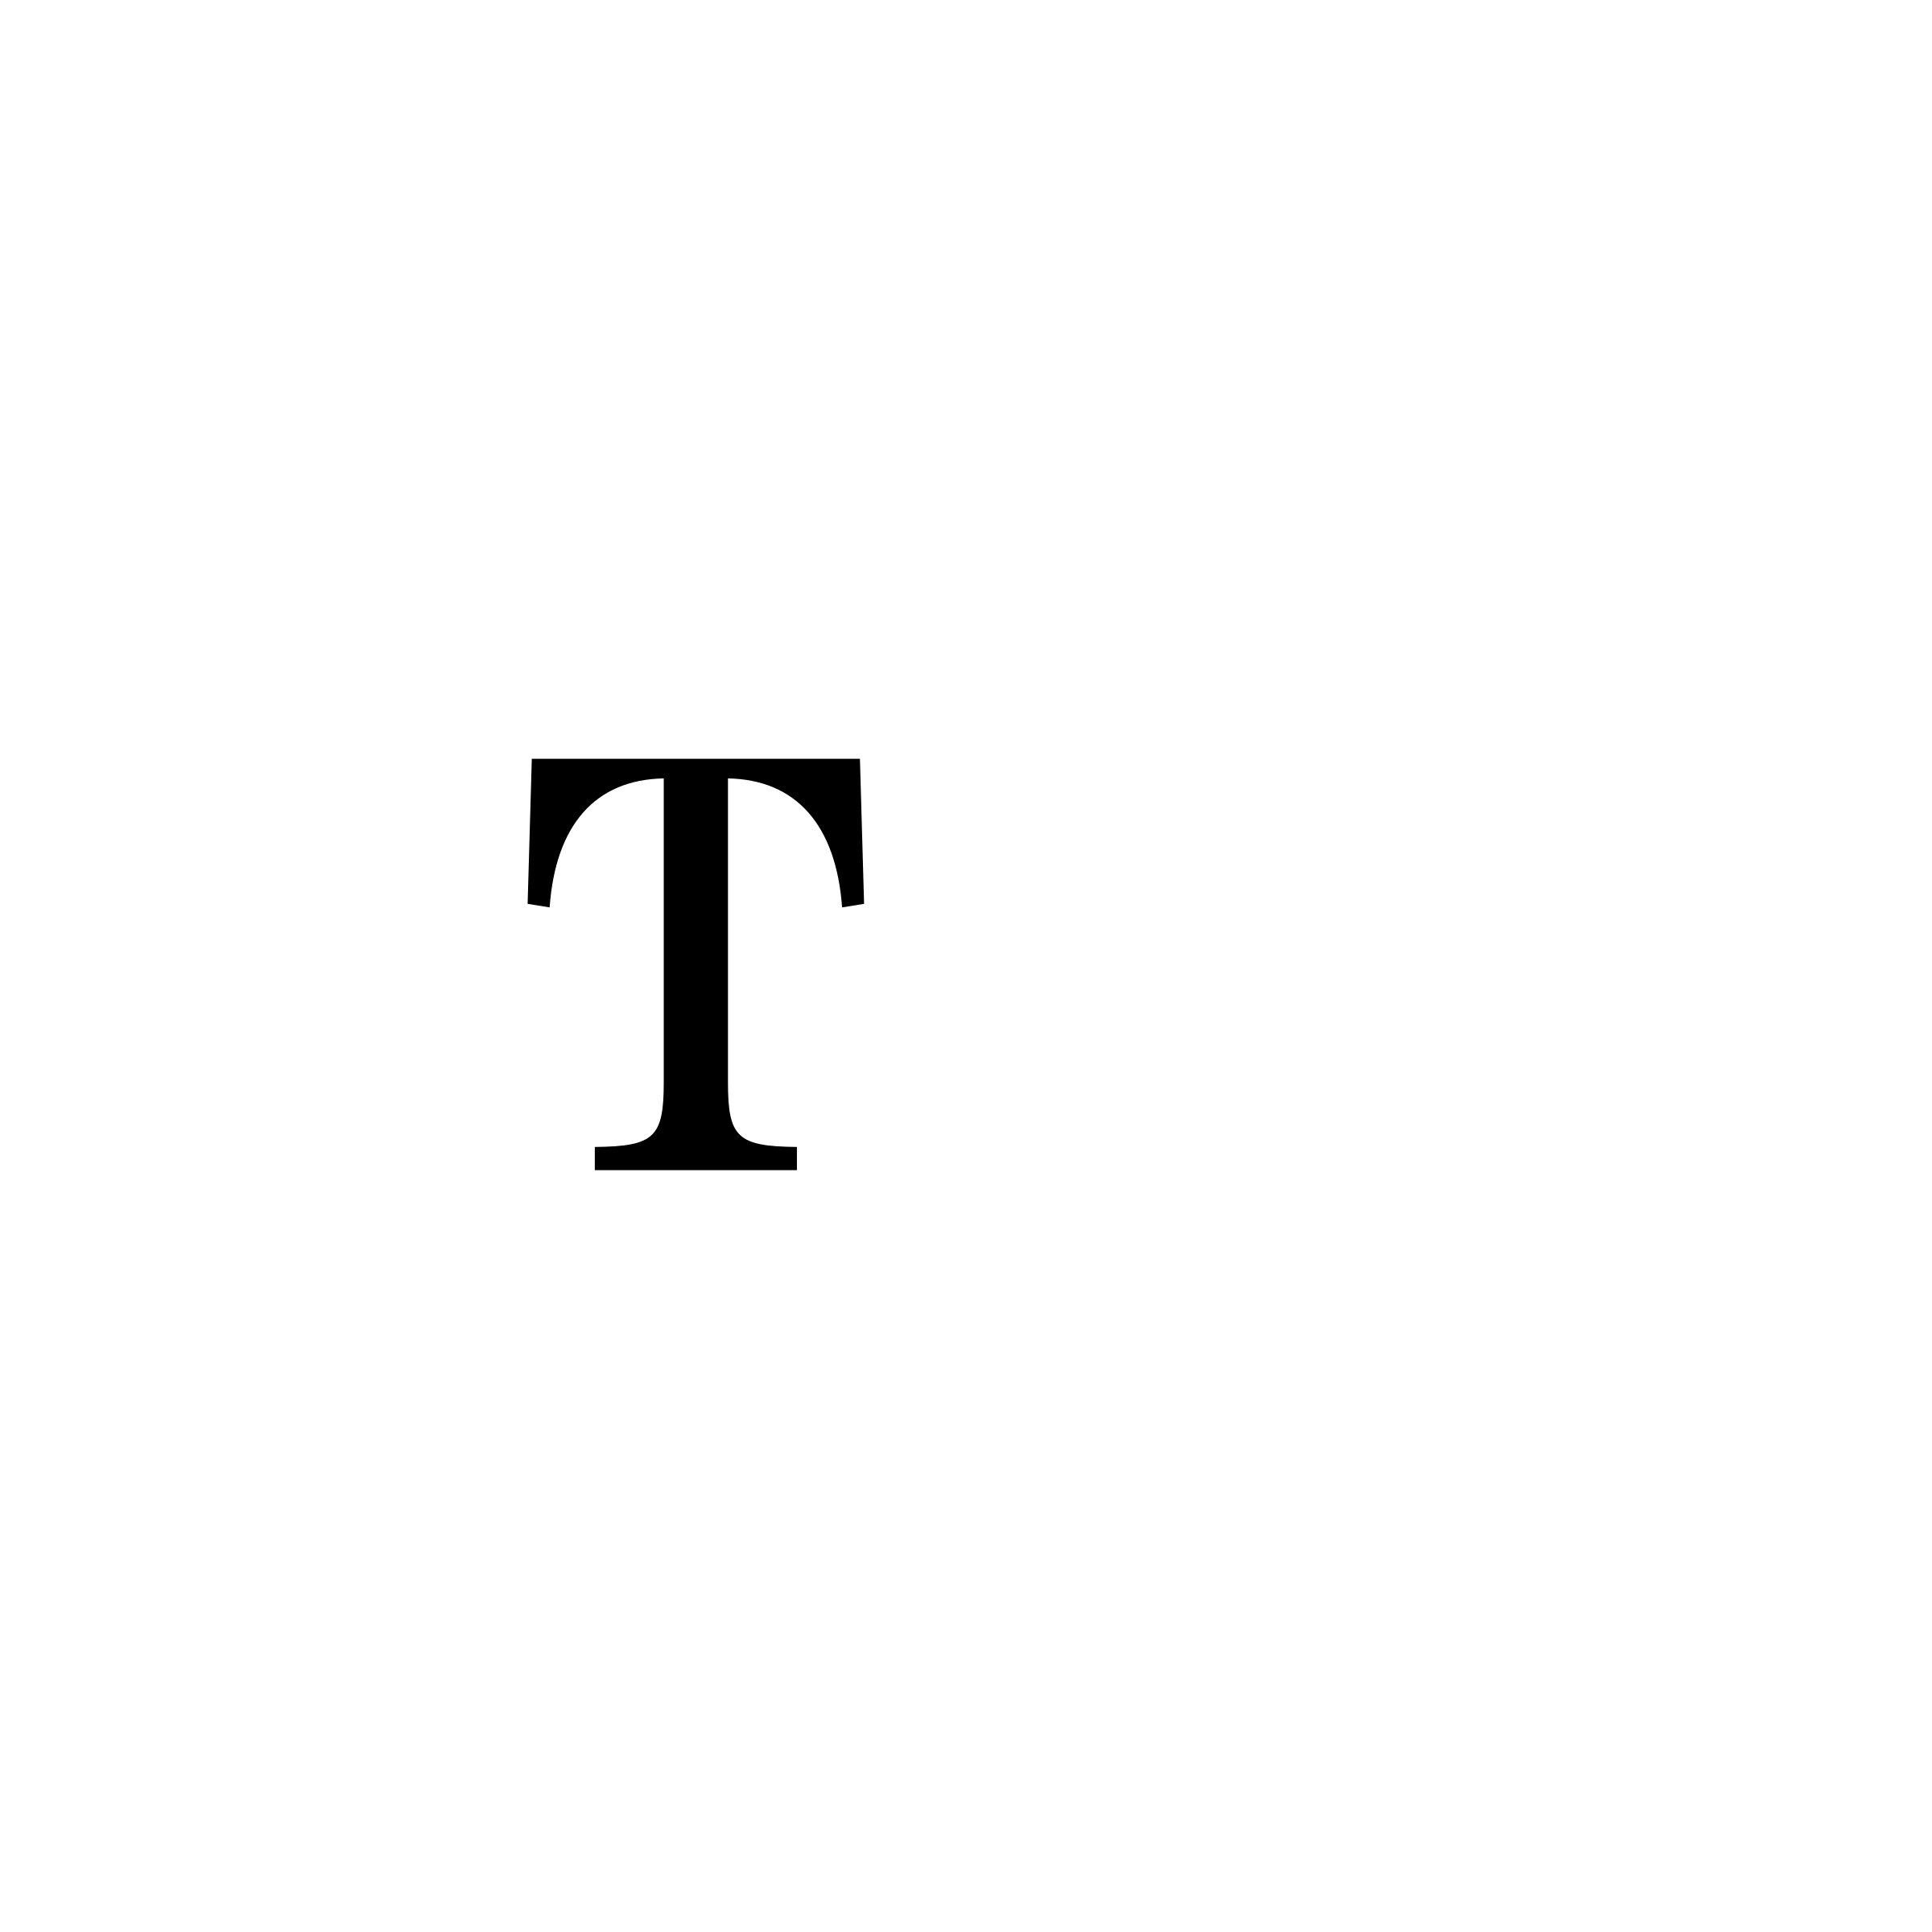 Deutsche Telekom Logo - Deutsche Telekom Logo PNG Transparent & SVG Vector - Freebie Supply